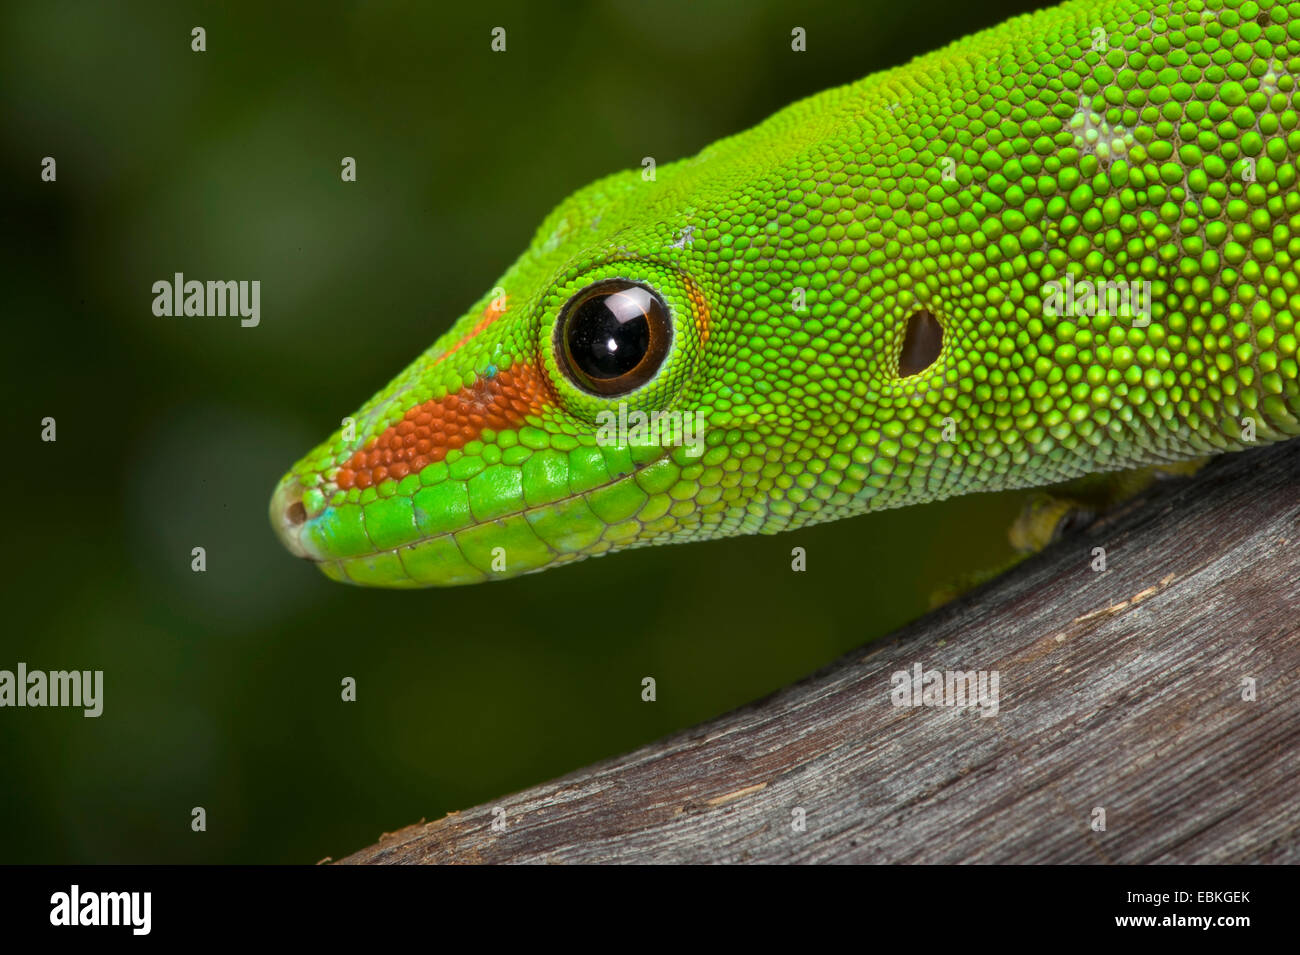 madagascar giant day gecko (Phelsuma madagascariensis grandis, Phelsuma grandis), portrait, side view Stock Photo